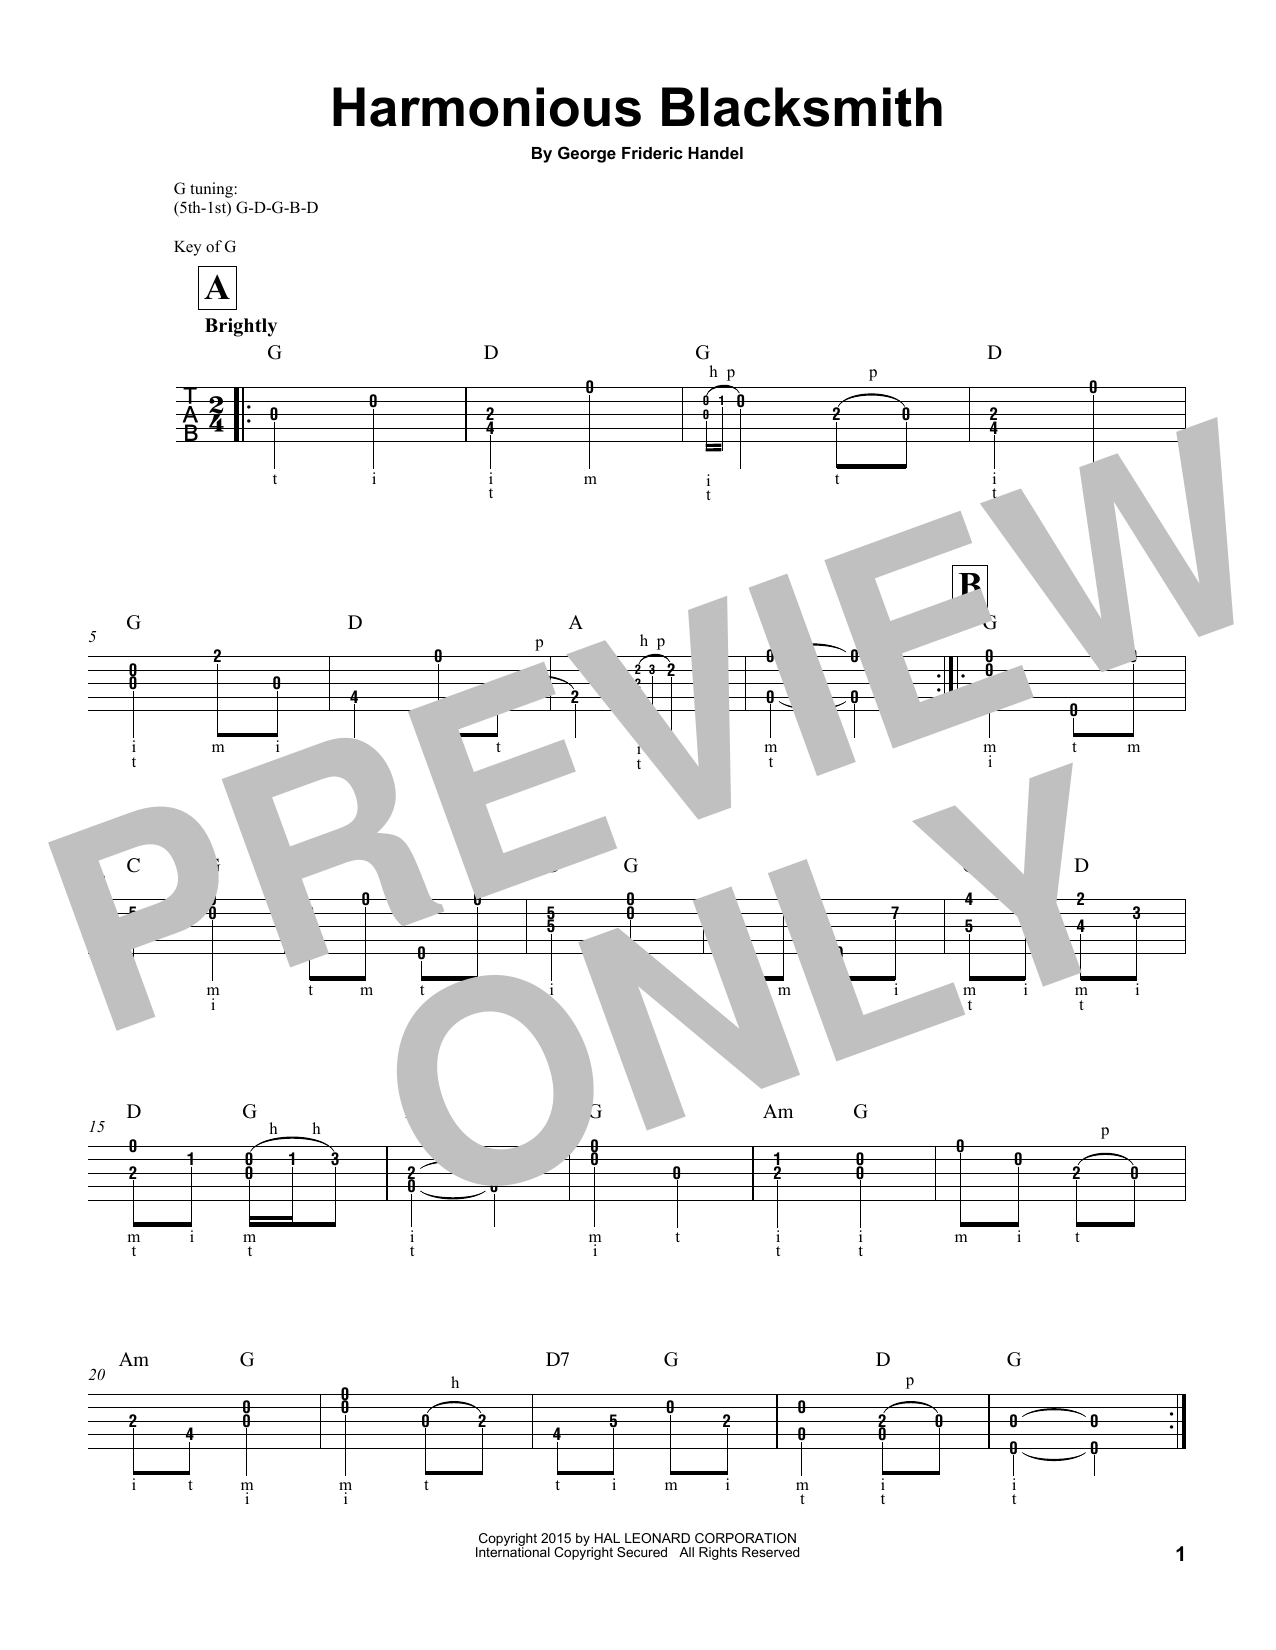 George Frideric Handel Harmonious Blacksmith Sheet Music Notes & Chords for Tenor Saxophone - Download or Print PDF